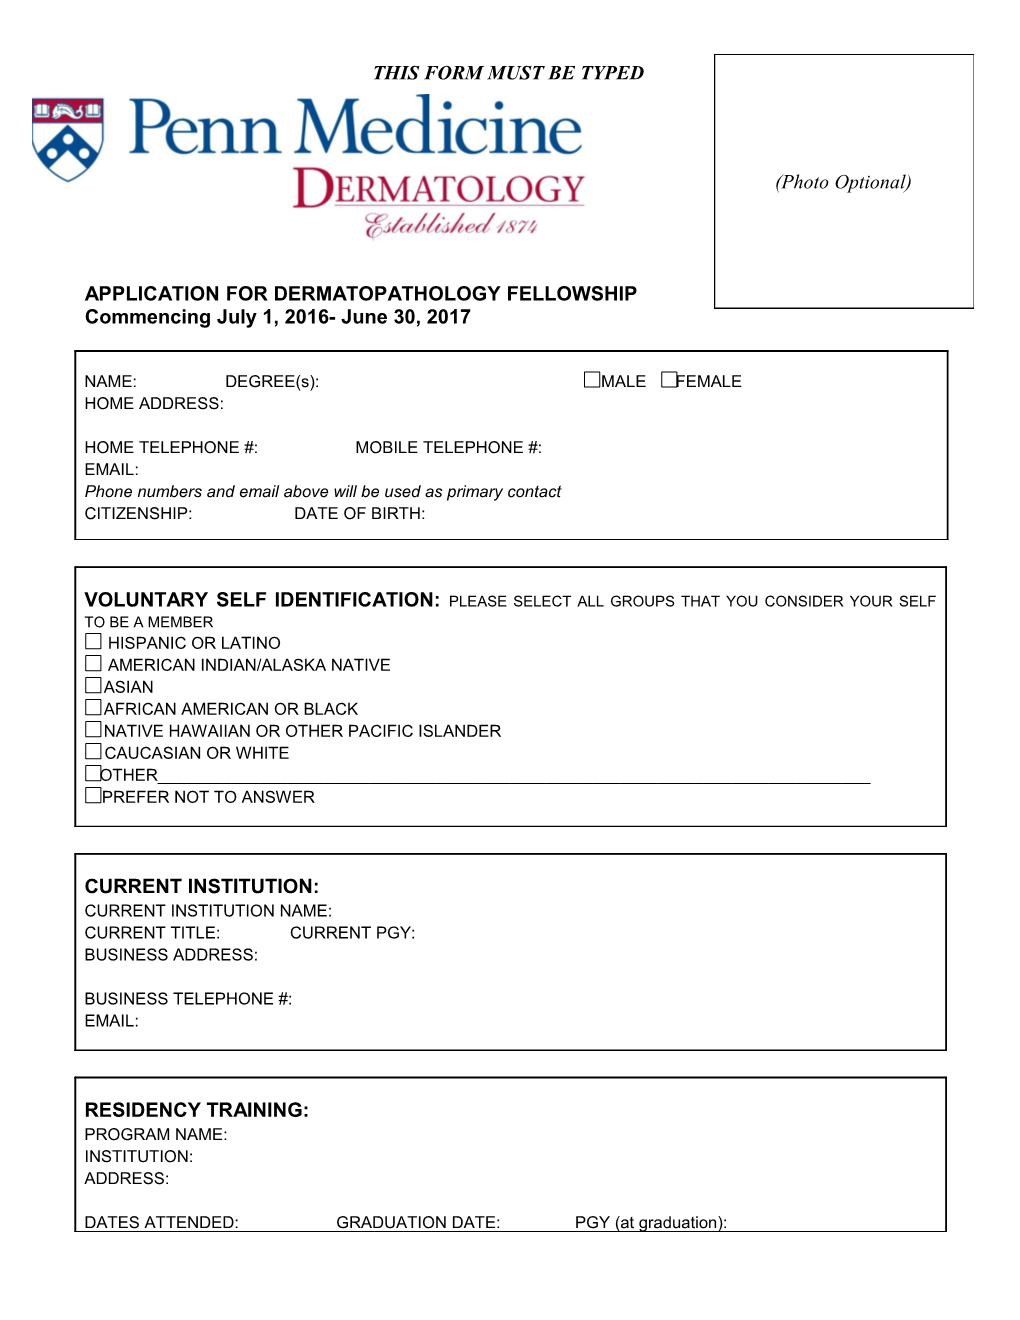 Application for Dermatopathology Fellowship